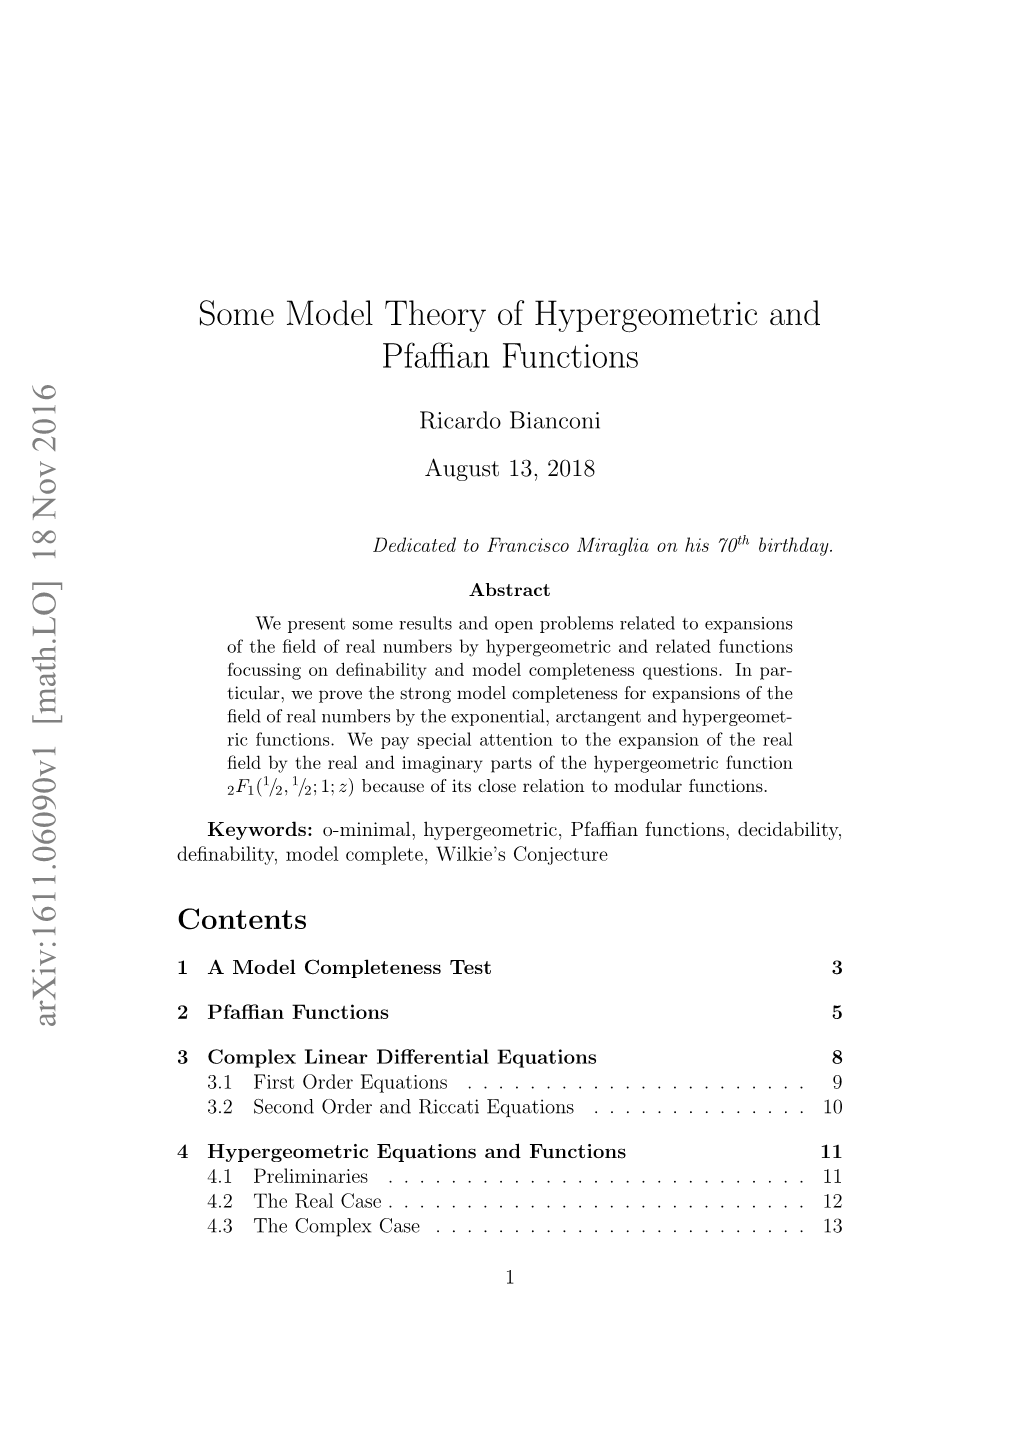 Some Model Theory of Hypergeometric and Pfaffian